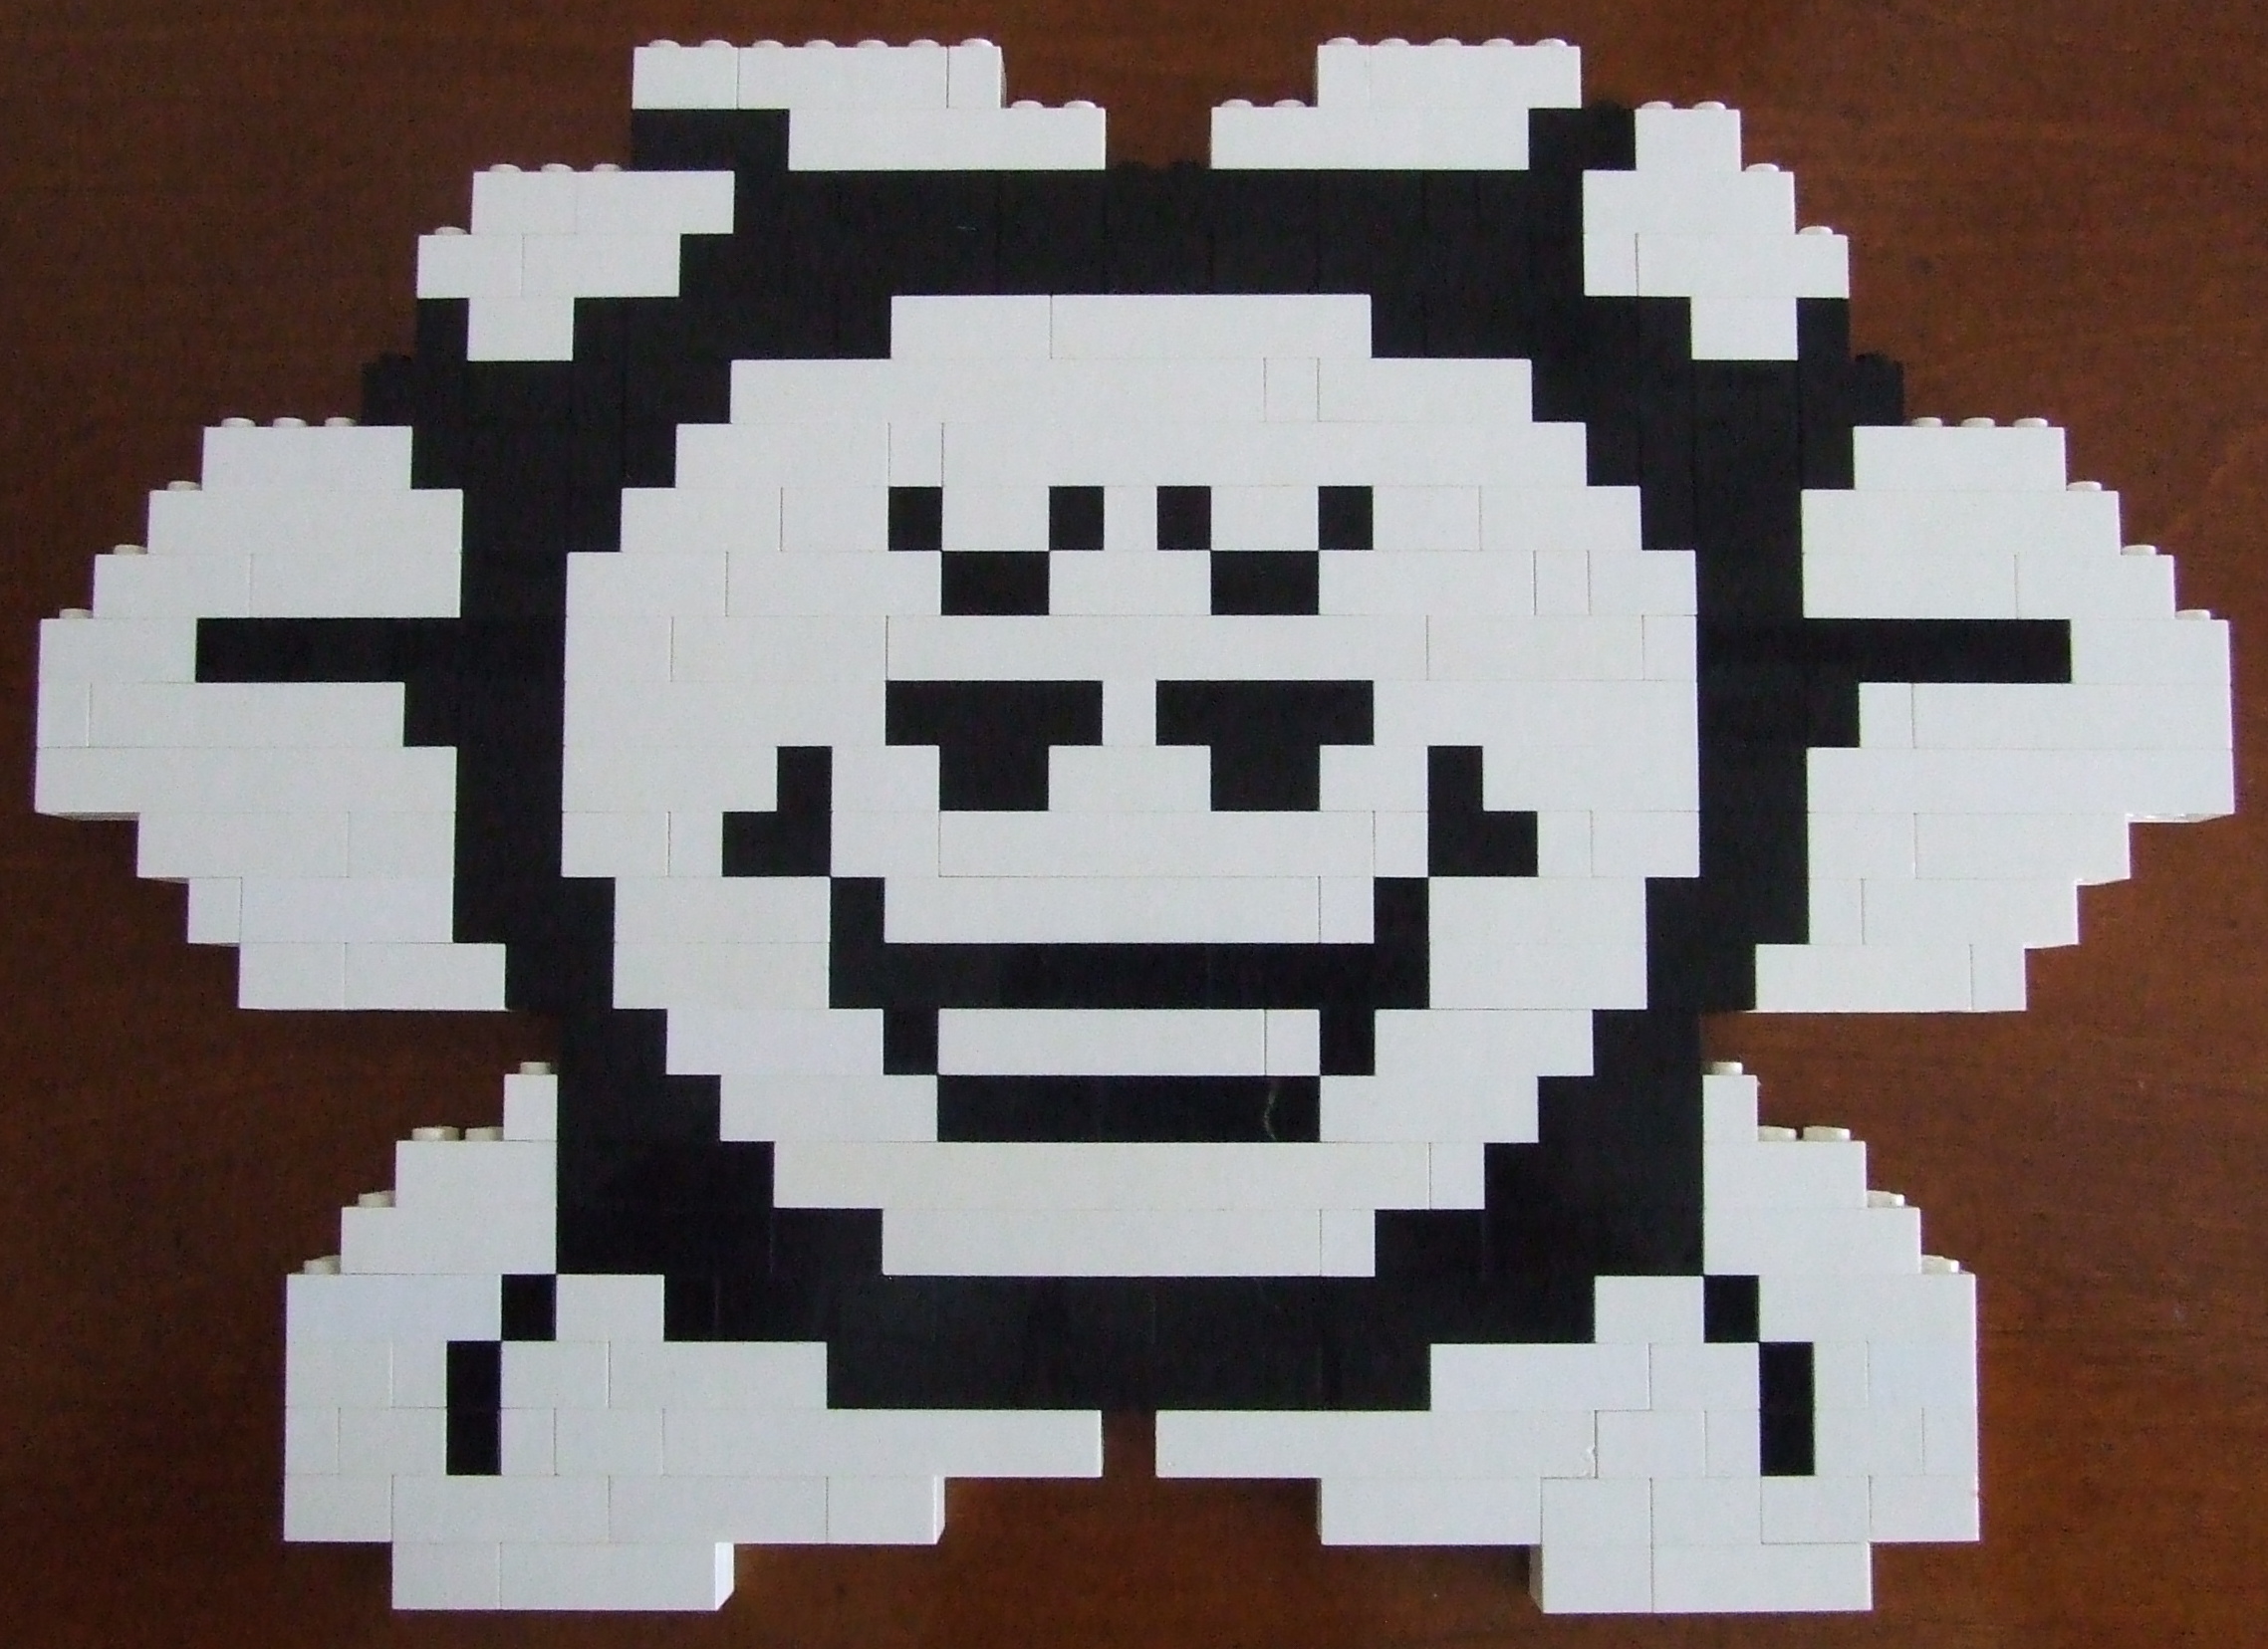 Flowey 2 - Undertale [LEGO PIXEL ART] by InfiniteFireGamer on DeviantArt